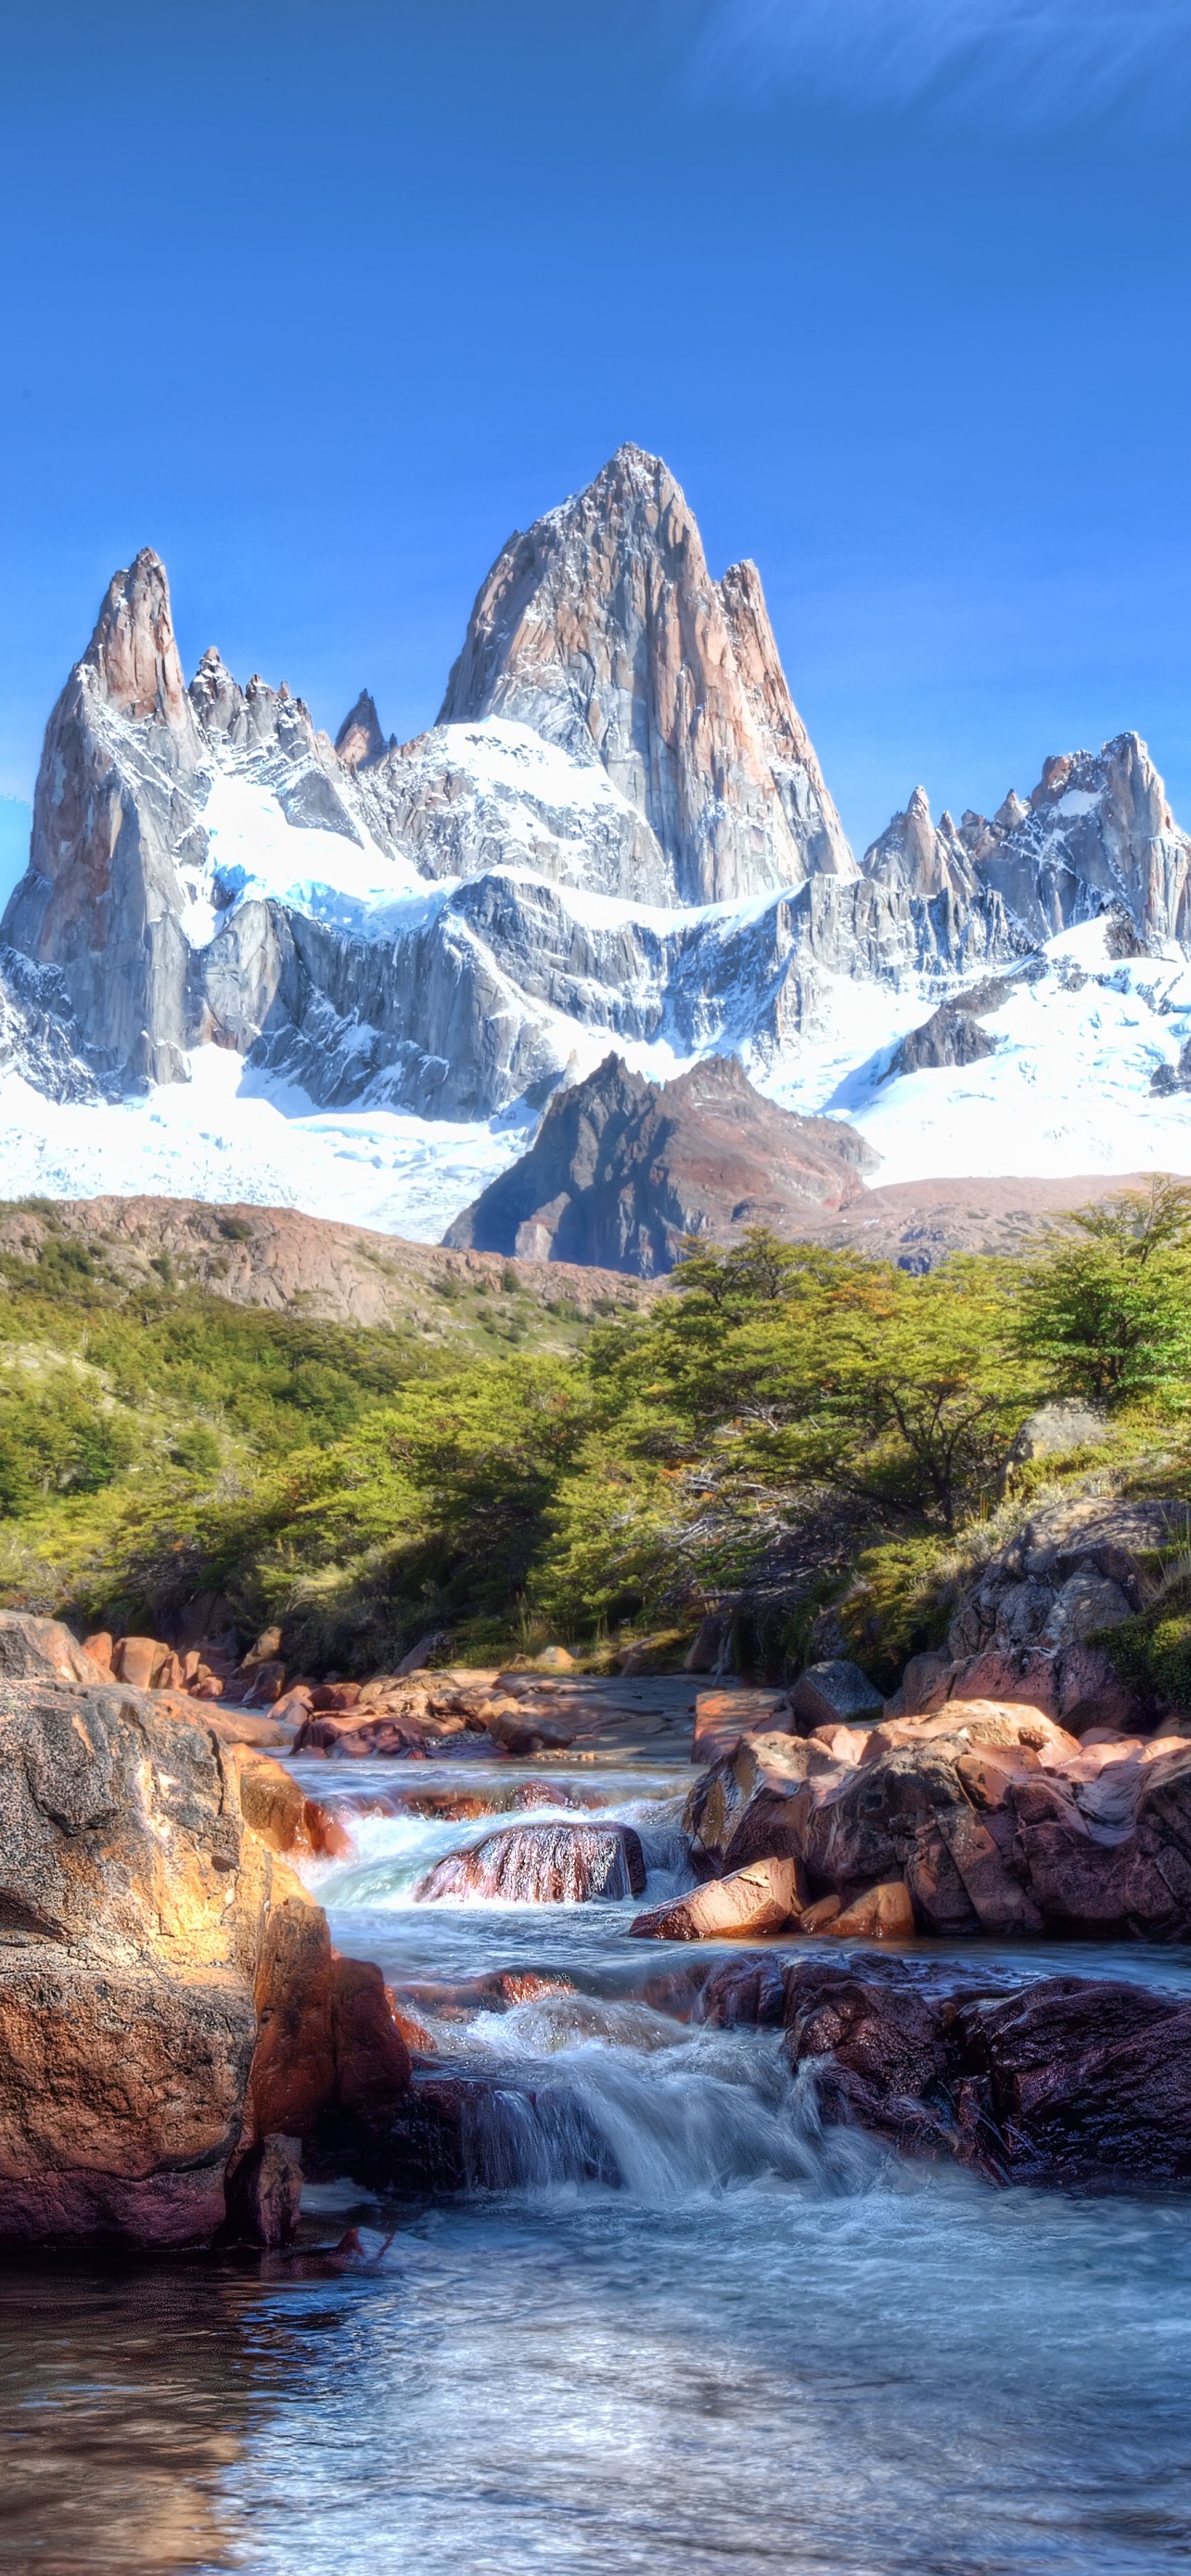 Fitz Roy 4K Wallpaper, Patagonia, Glacier mountains, Snow covered